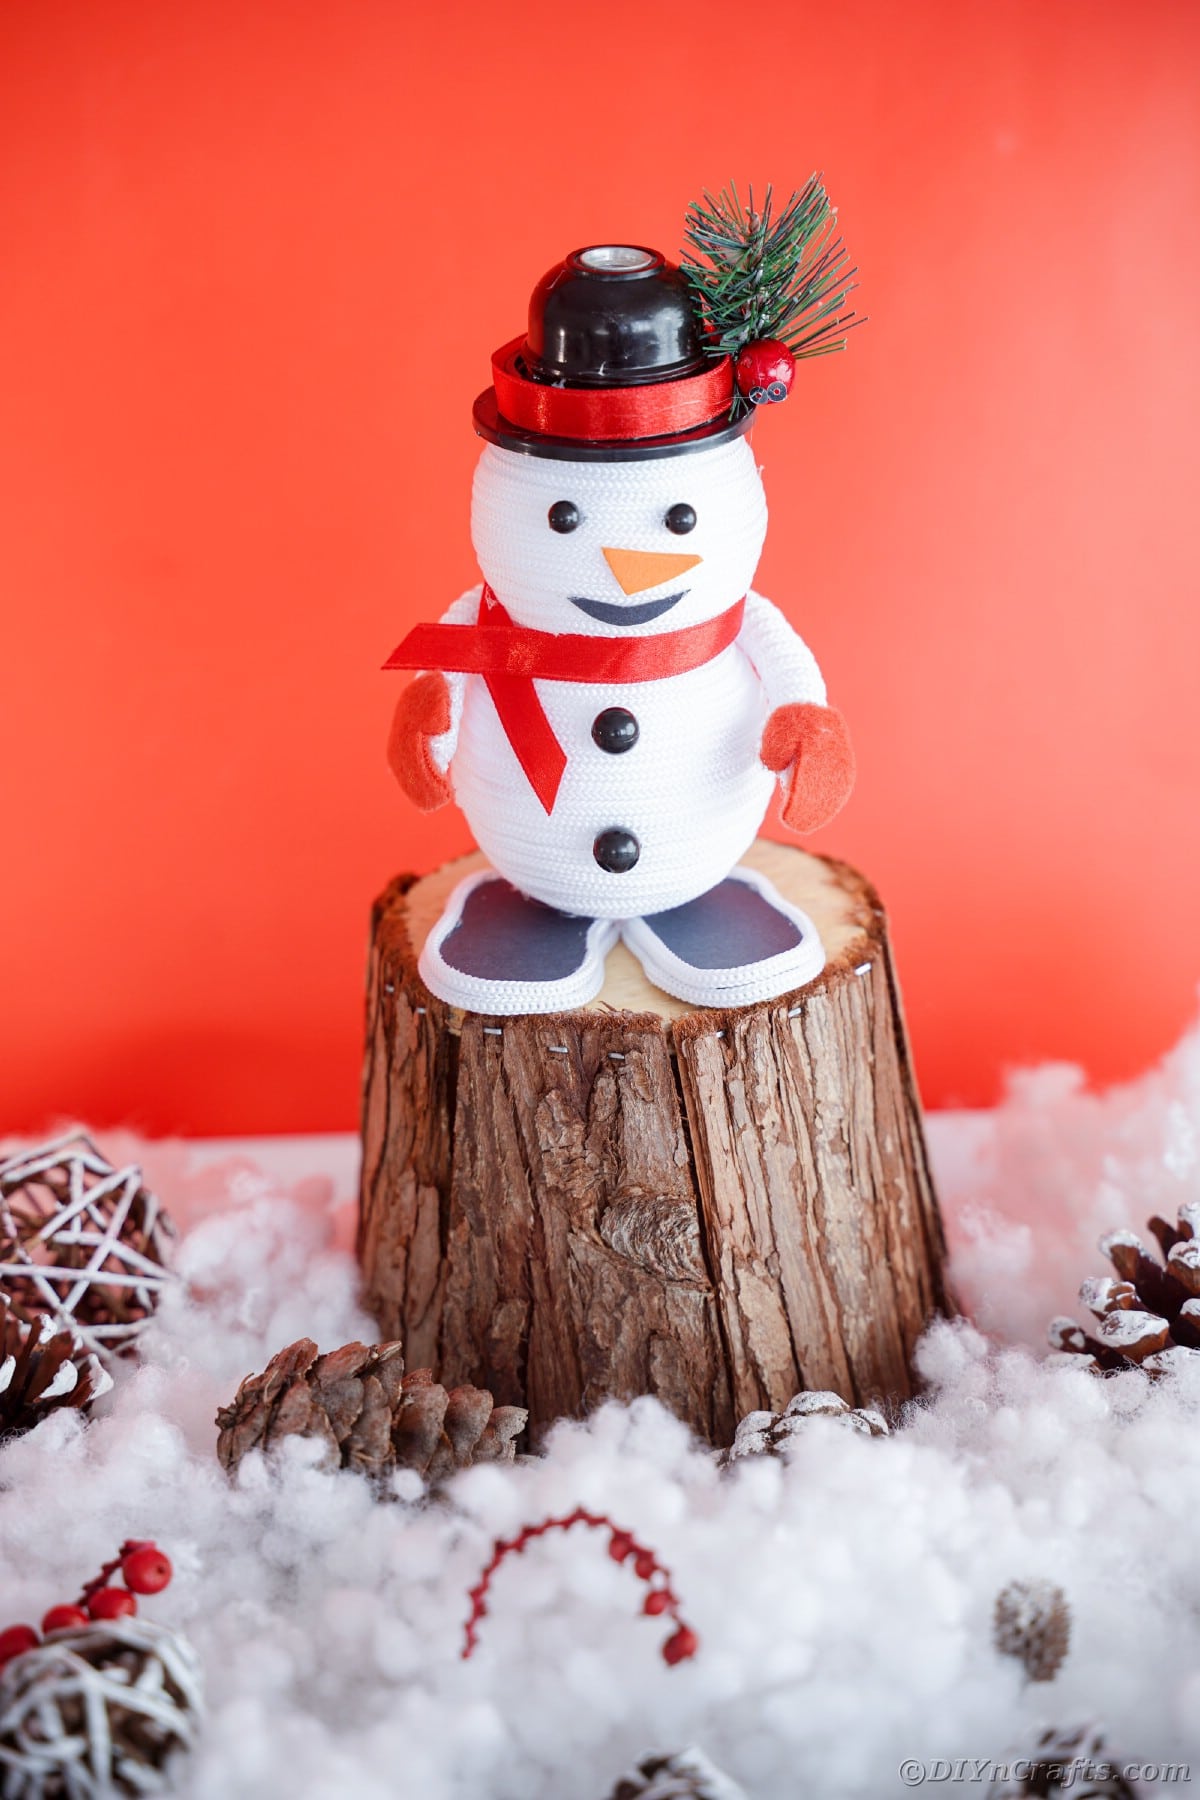 štor na lažnem snegu z rdečim ozadjem, ki drži mini snežaka